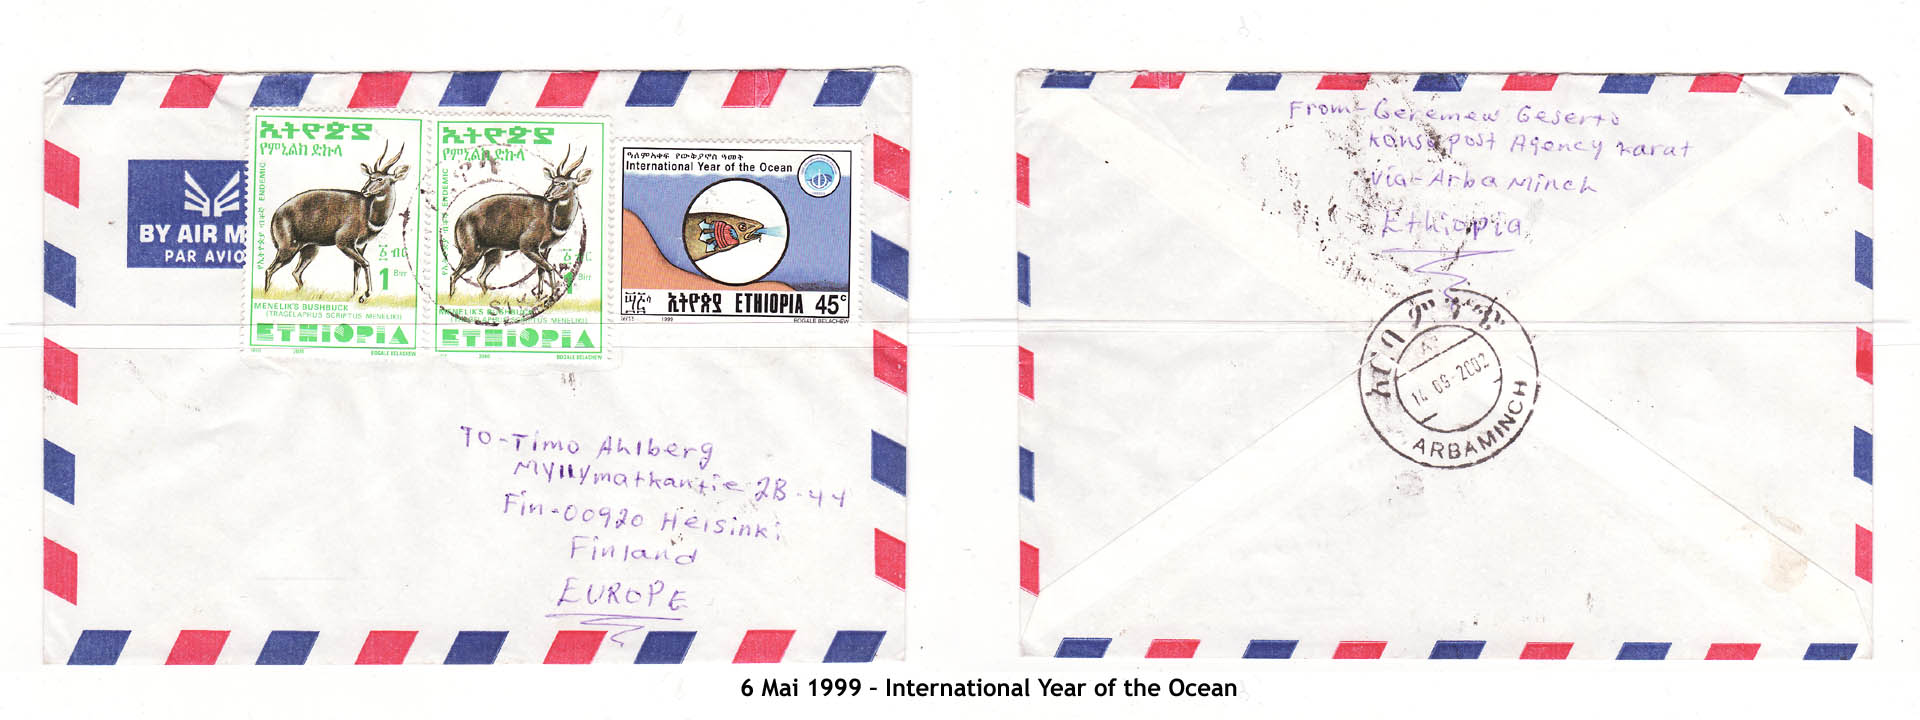 19990506 – International Year of the Ocean